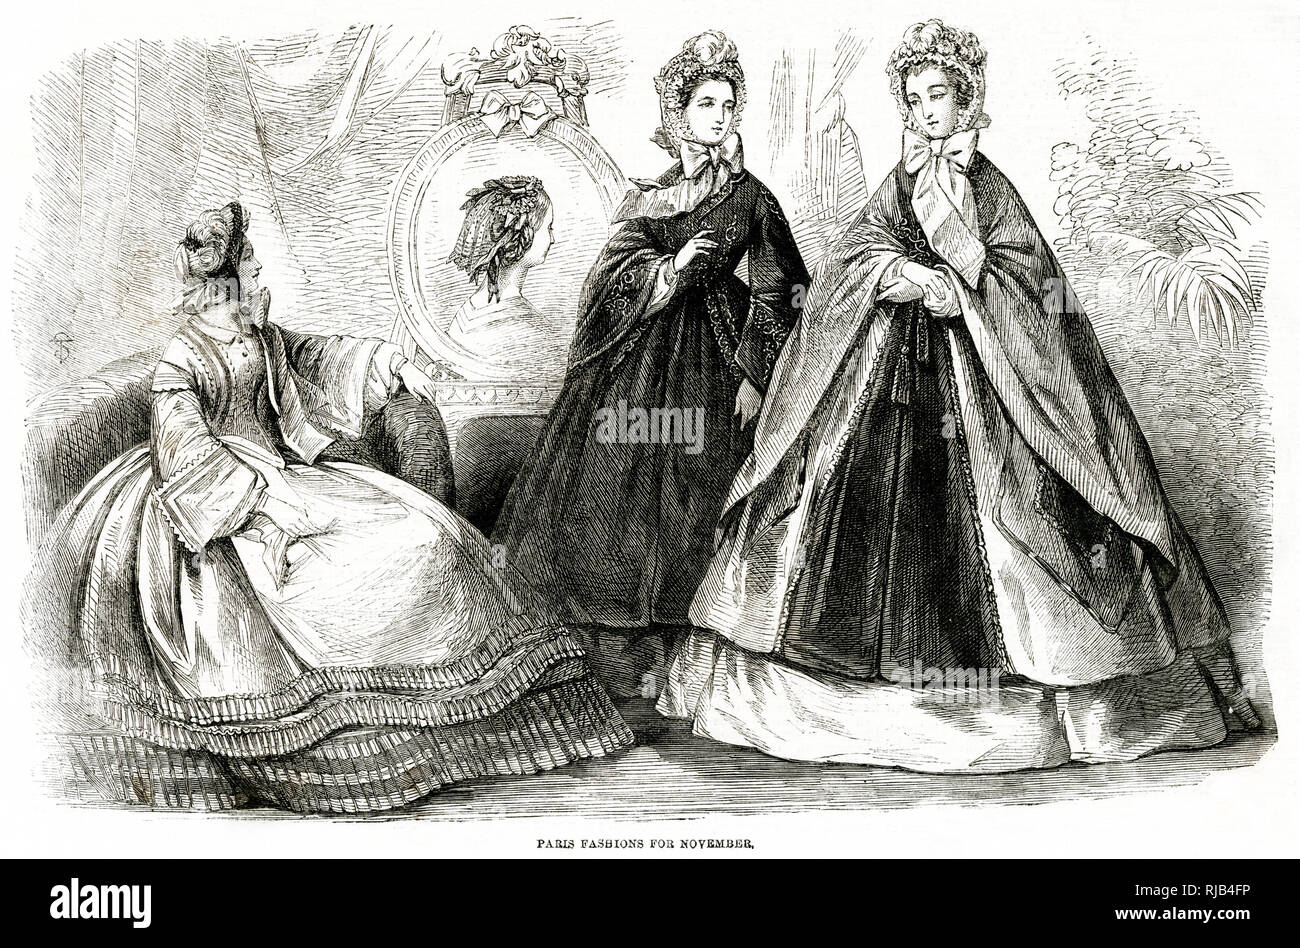 Fashions for November 1861 Stock Photo